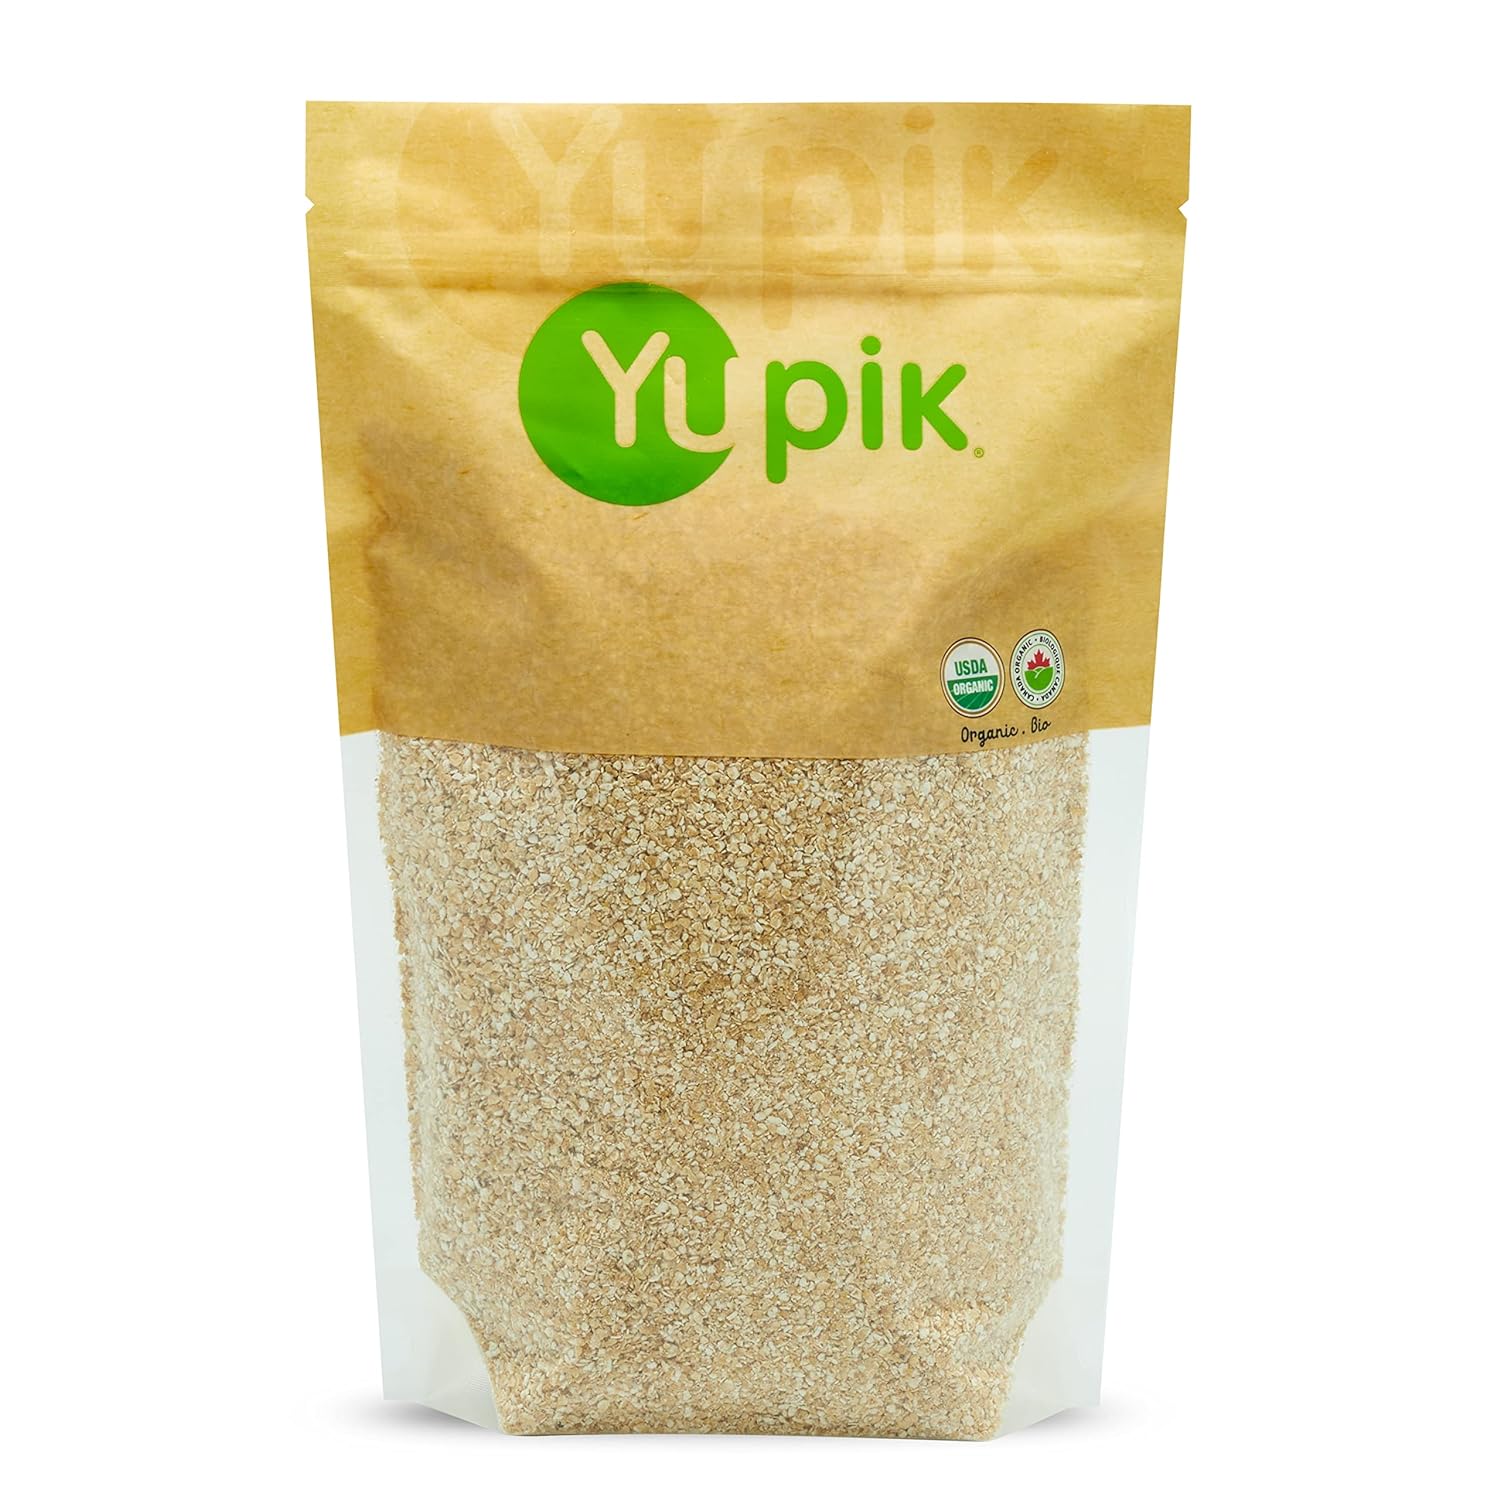 Yupik Organic Gluten Free Oat Bran, 2.2 lbs, Breakfast Cereal Topping, High Fiber, Vegan, GMO-Free, Vegetarian, Keto, Gluten-Free, Brown